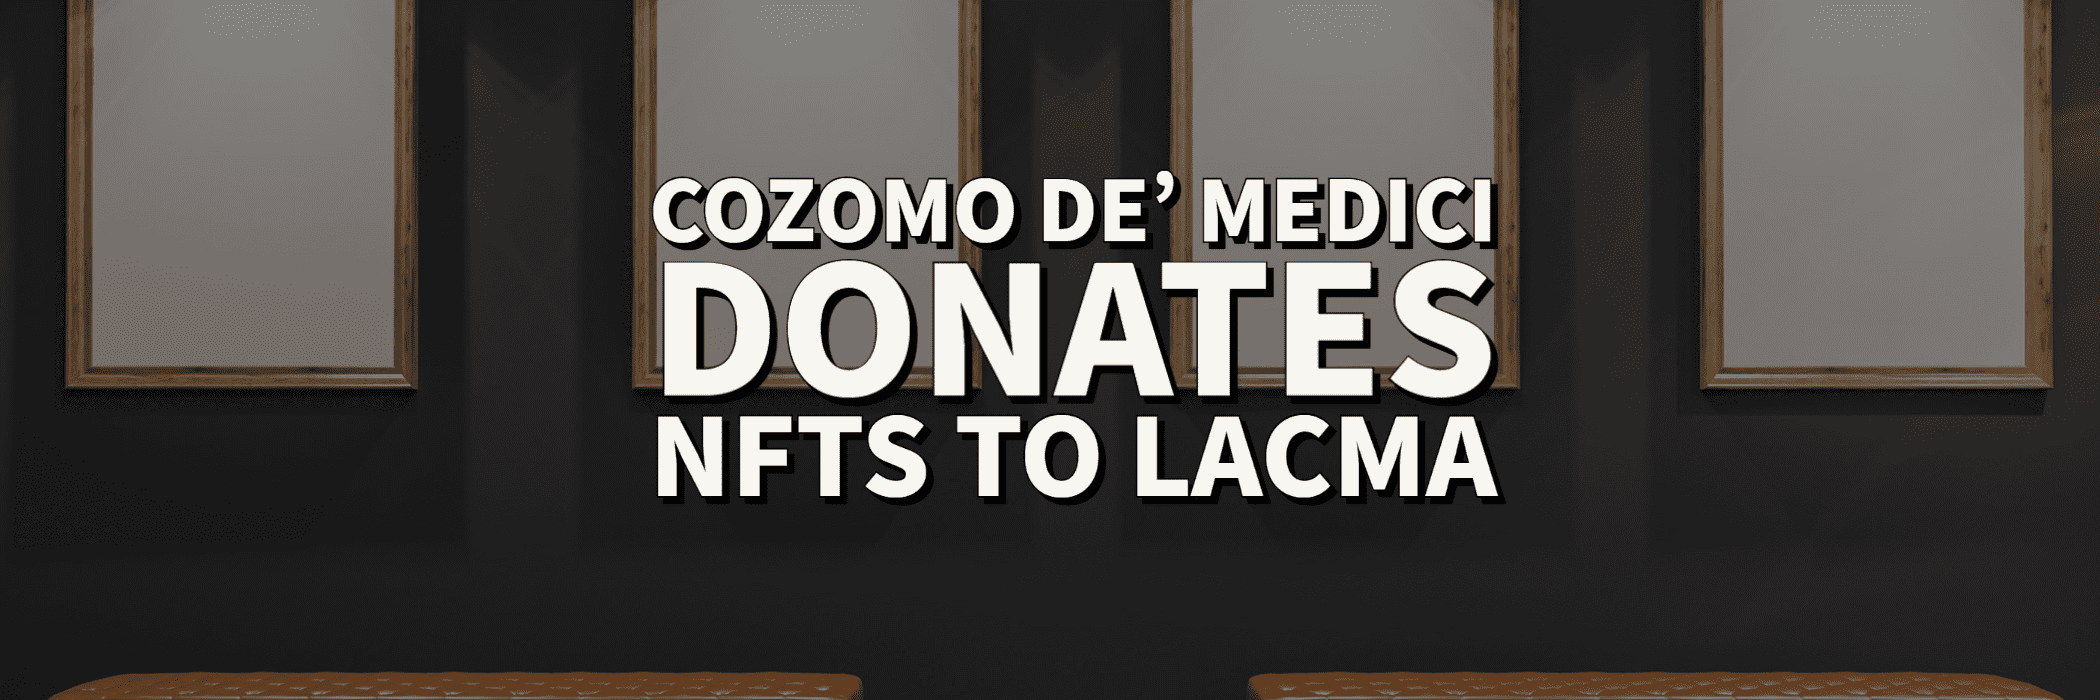 Cozomo de’ Medici makes massive donation